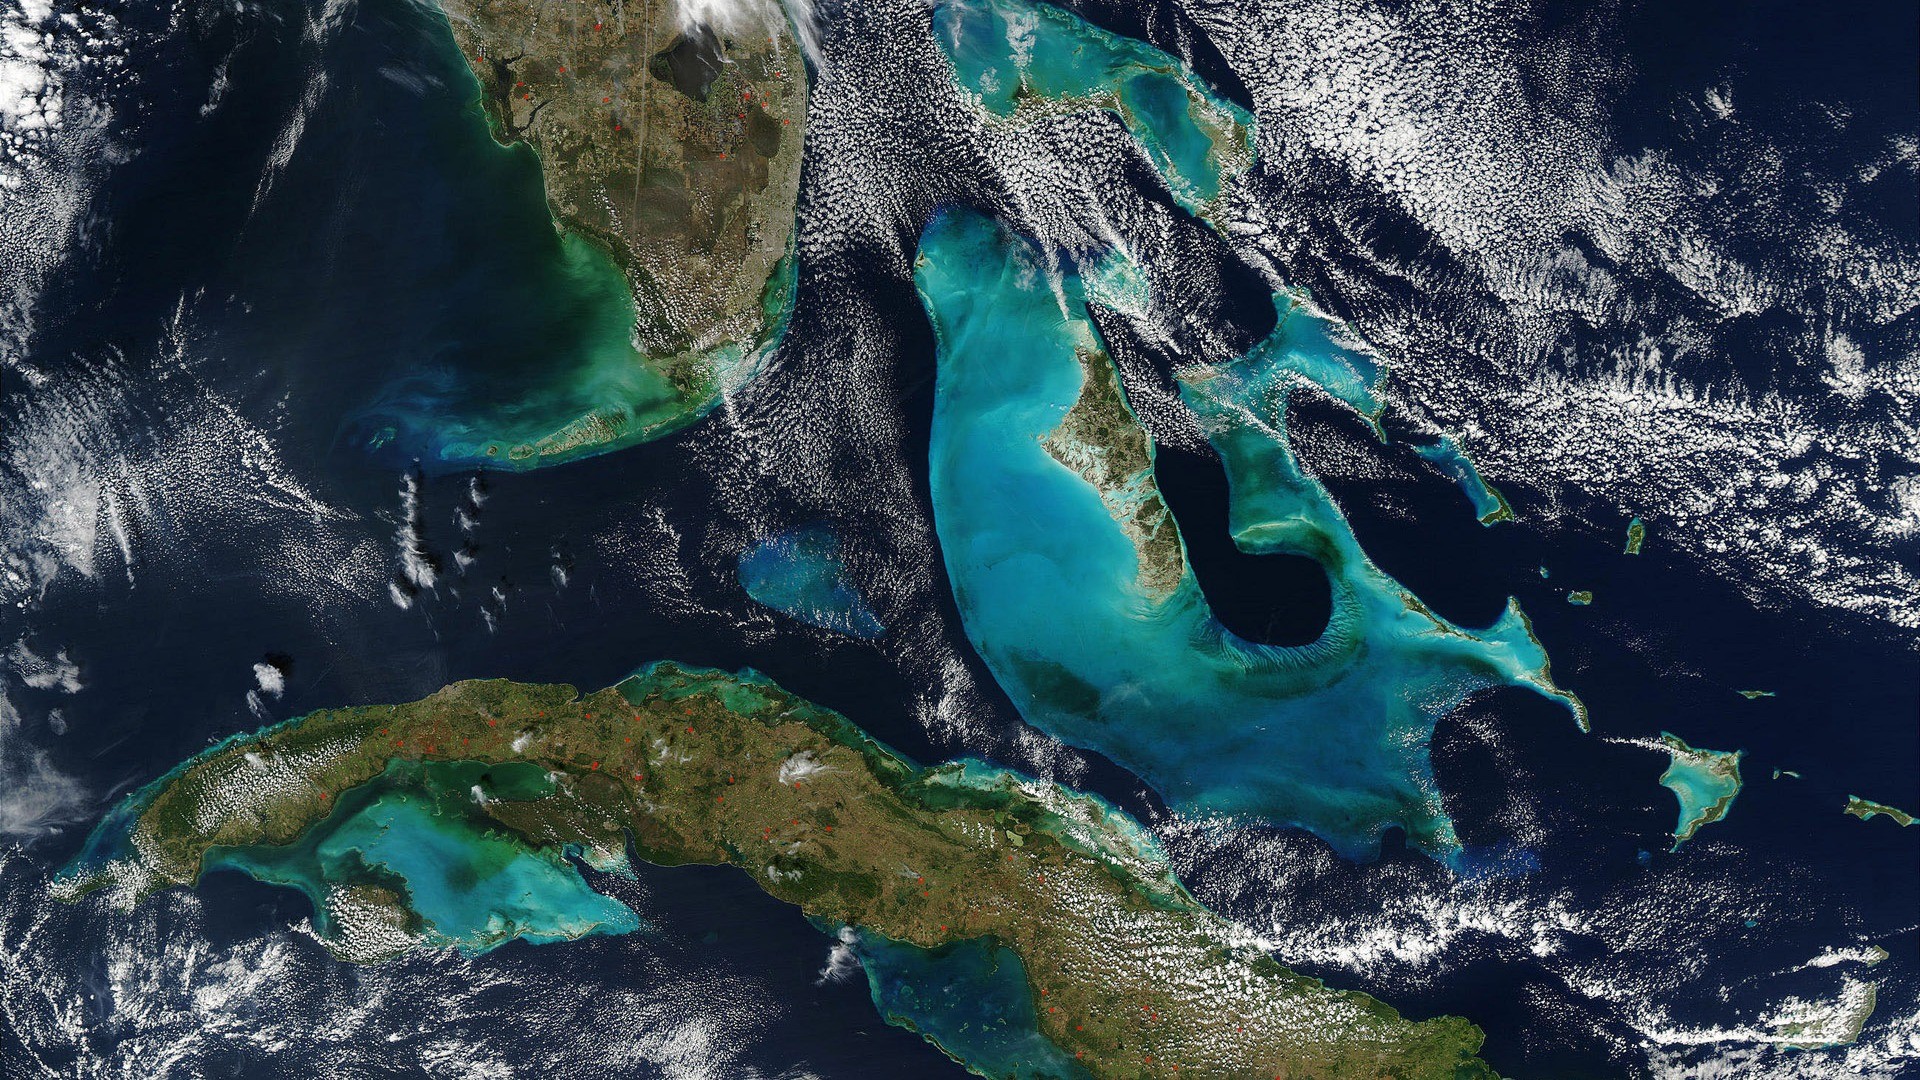 Hd Wallpaper Beautiful Bird S Eye View Of Earth - Bahamas View From Space - HD Wallpaper 